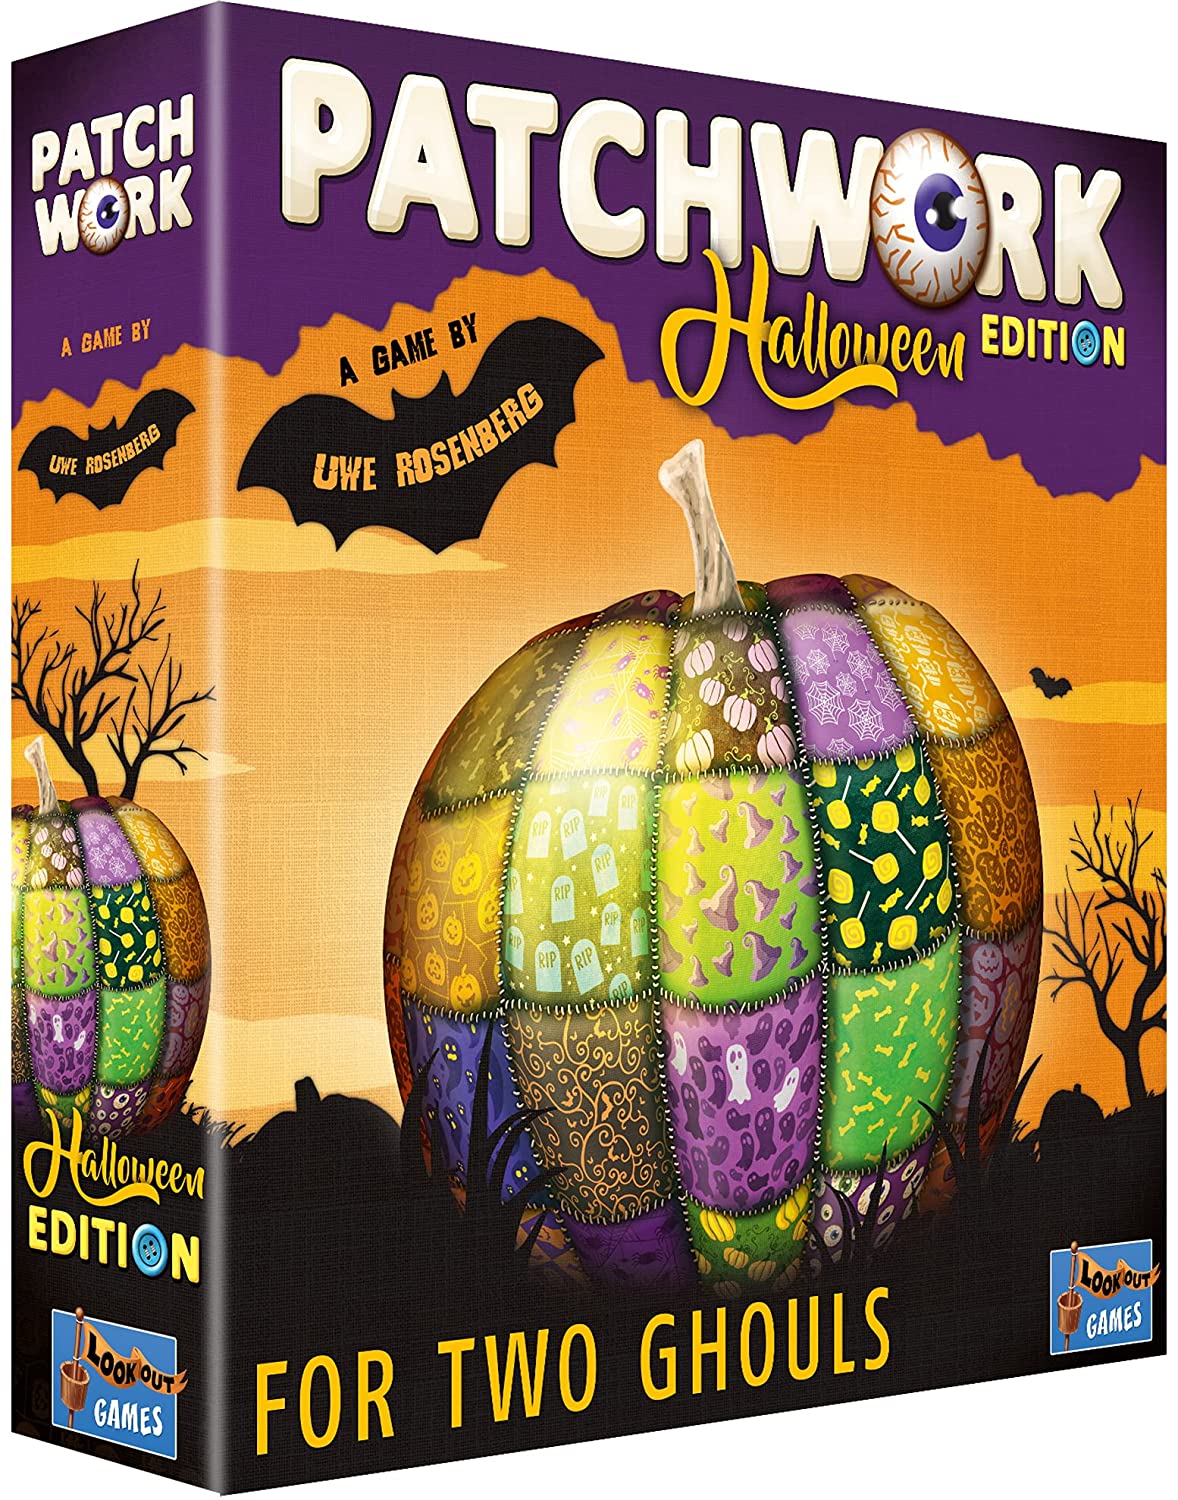 Patchwork Halloween Edition